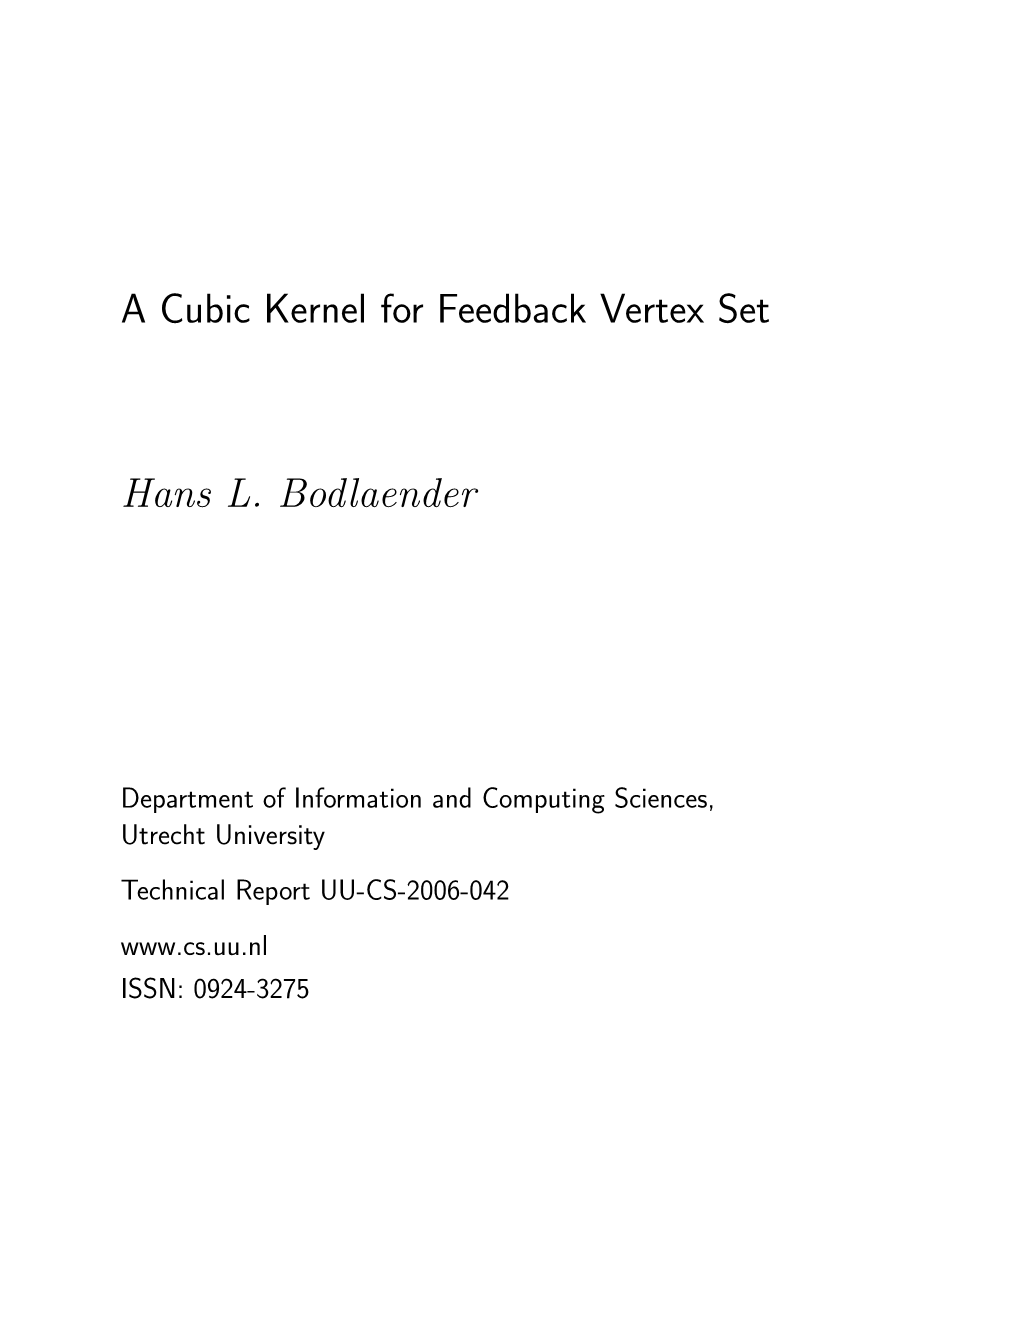 A Cubic Kernel for Feedback Vertex Set Hans L. Bodlaender